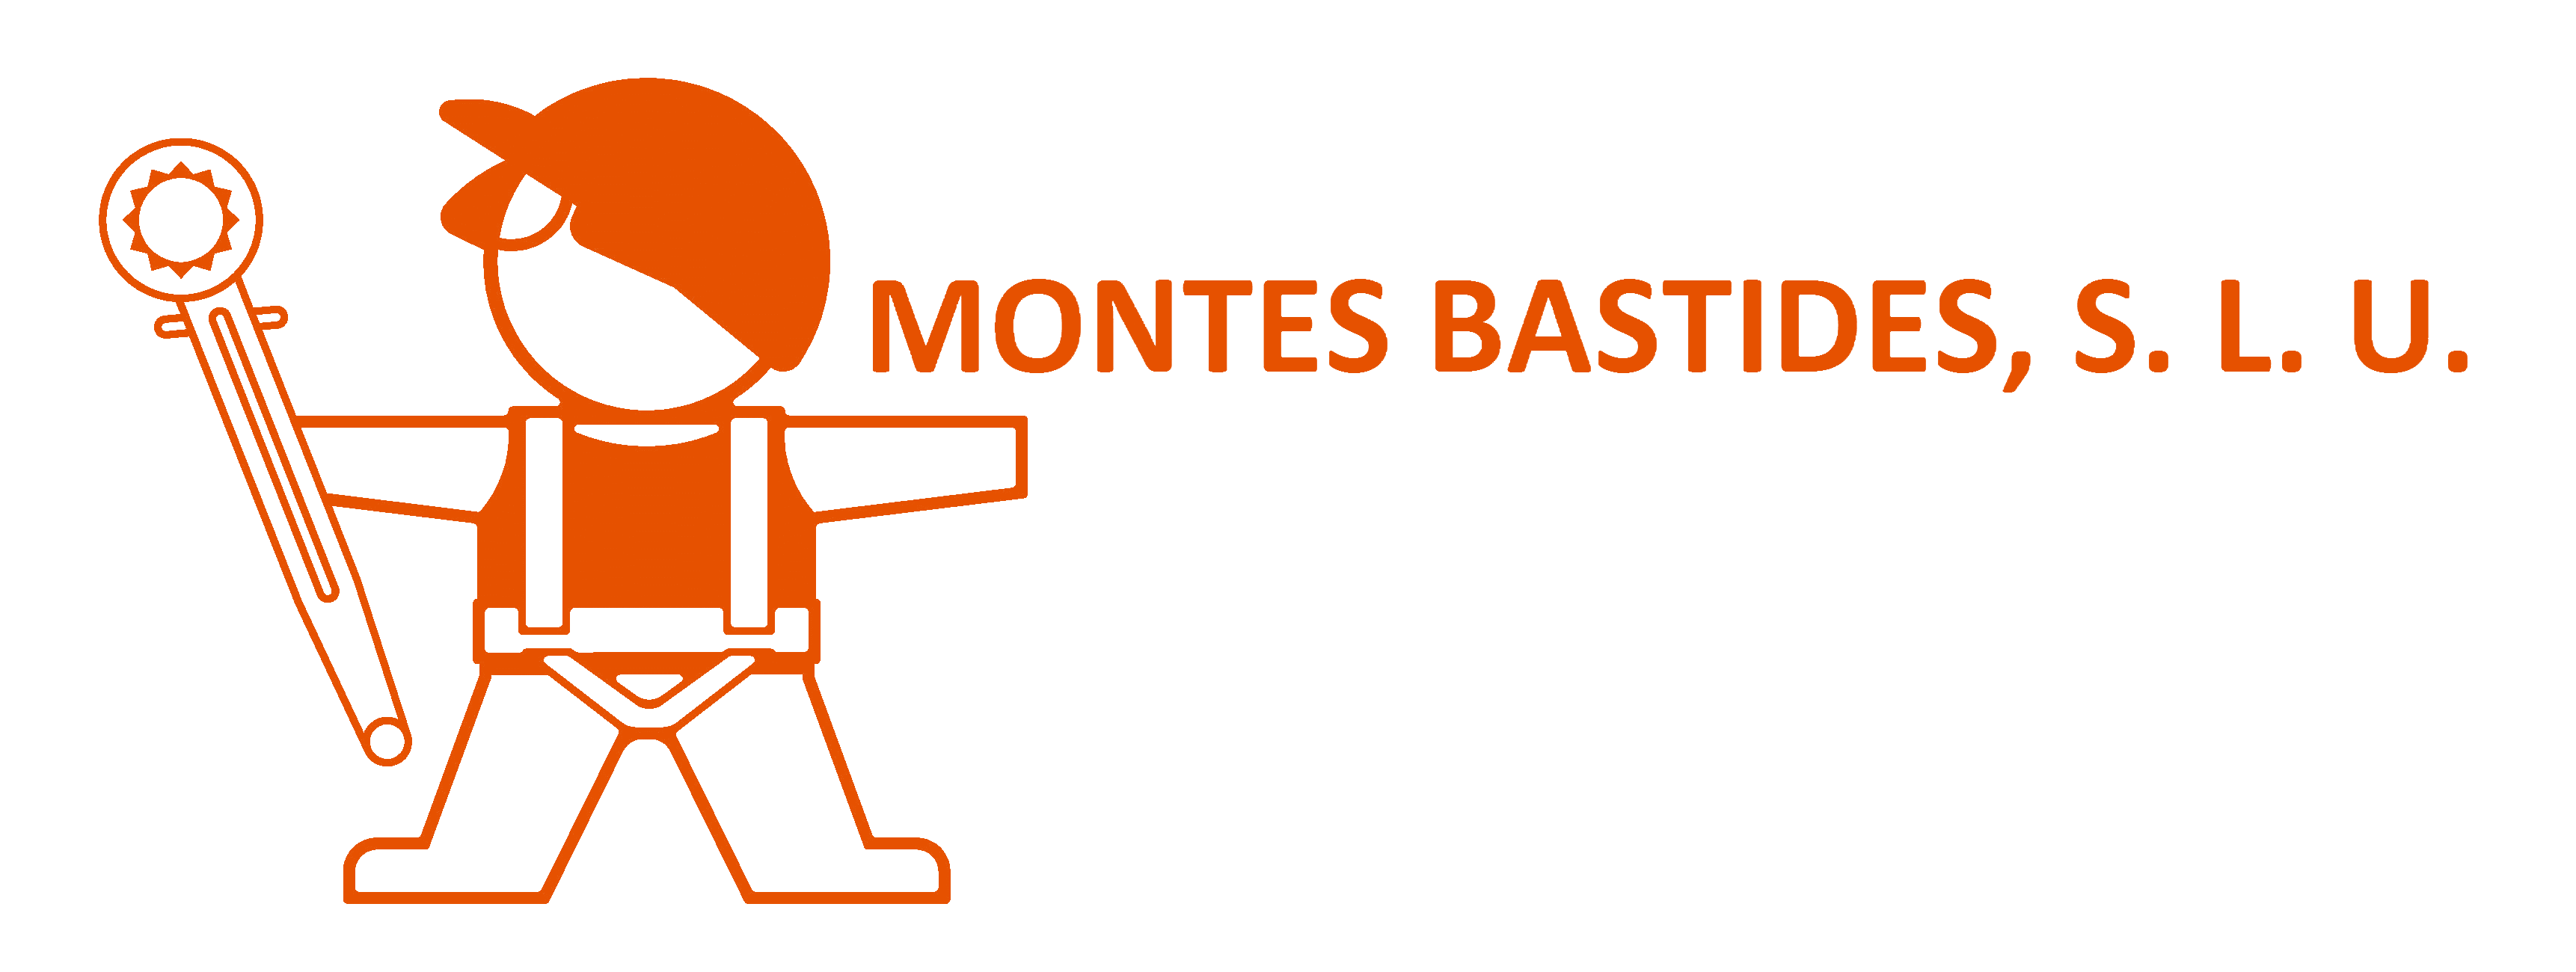 MONTES BASTIDES logo